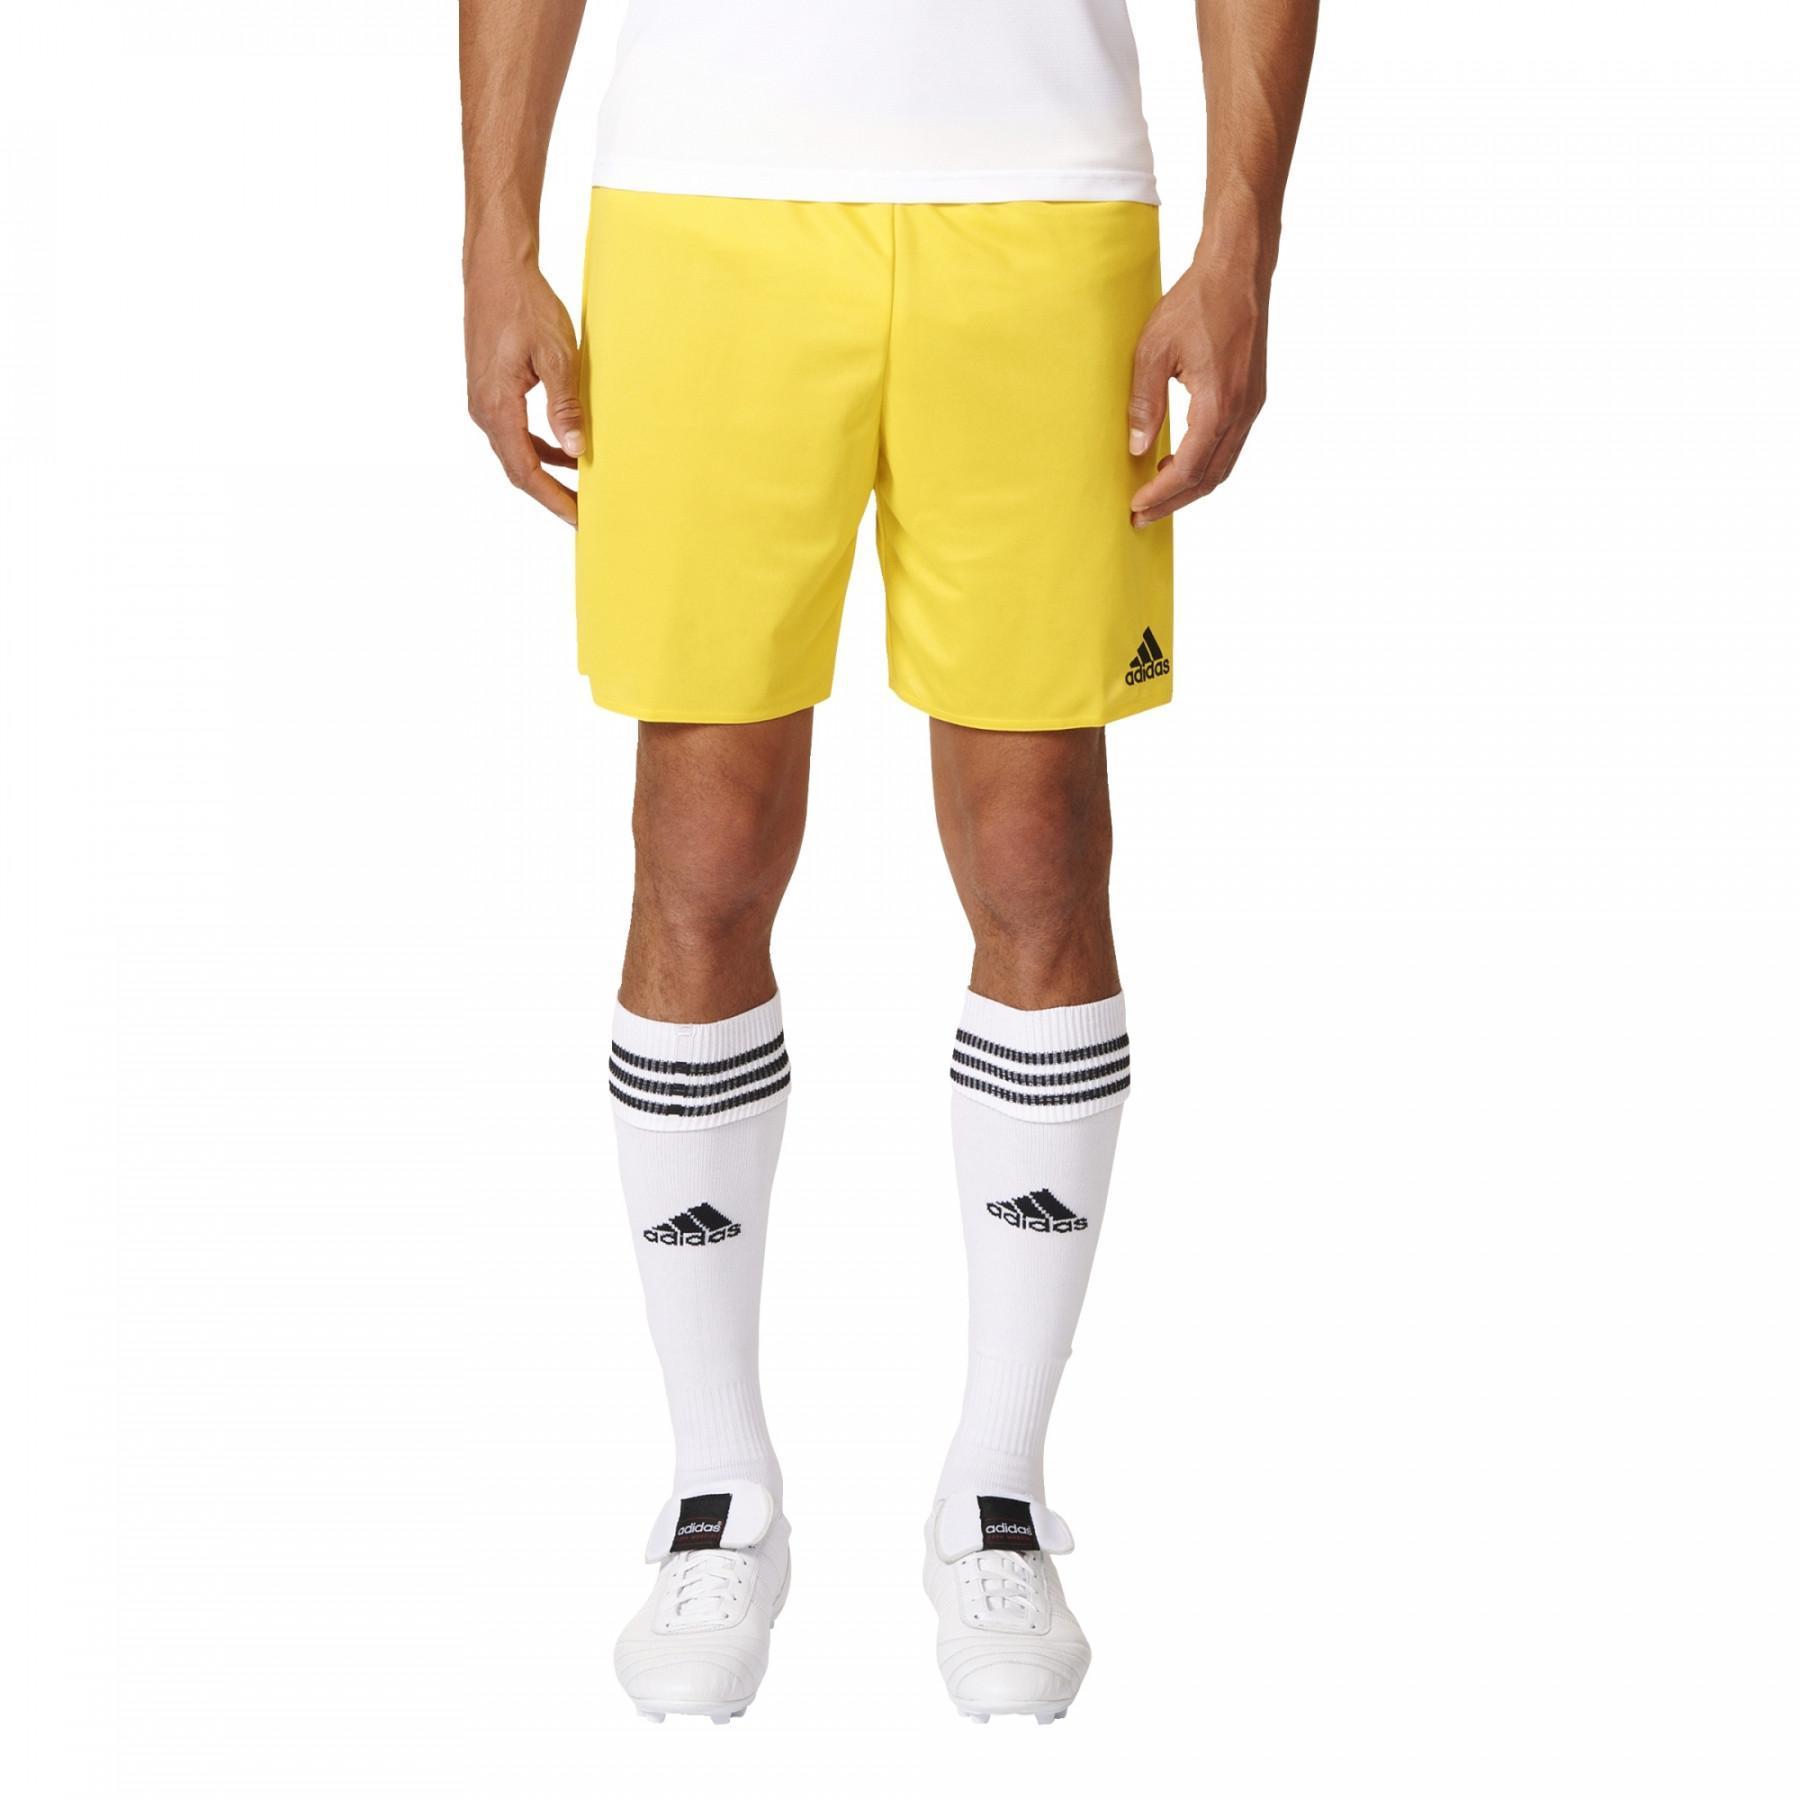 Slipperbroek adidas Parma 16